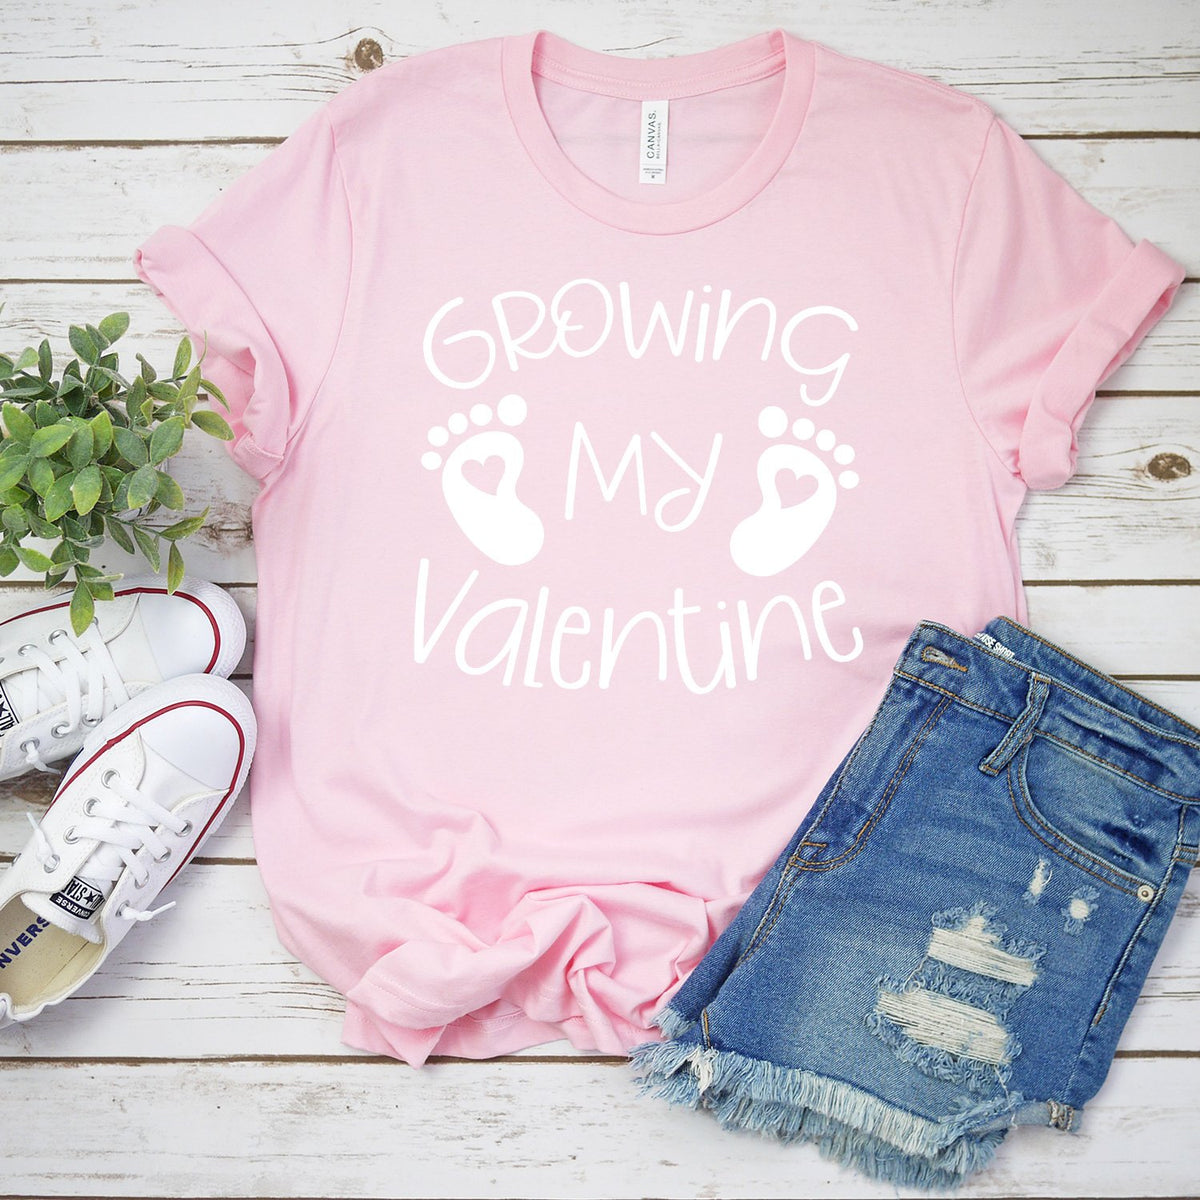 Growing My Valentine - Short Sleeve Tee Shirt